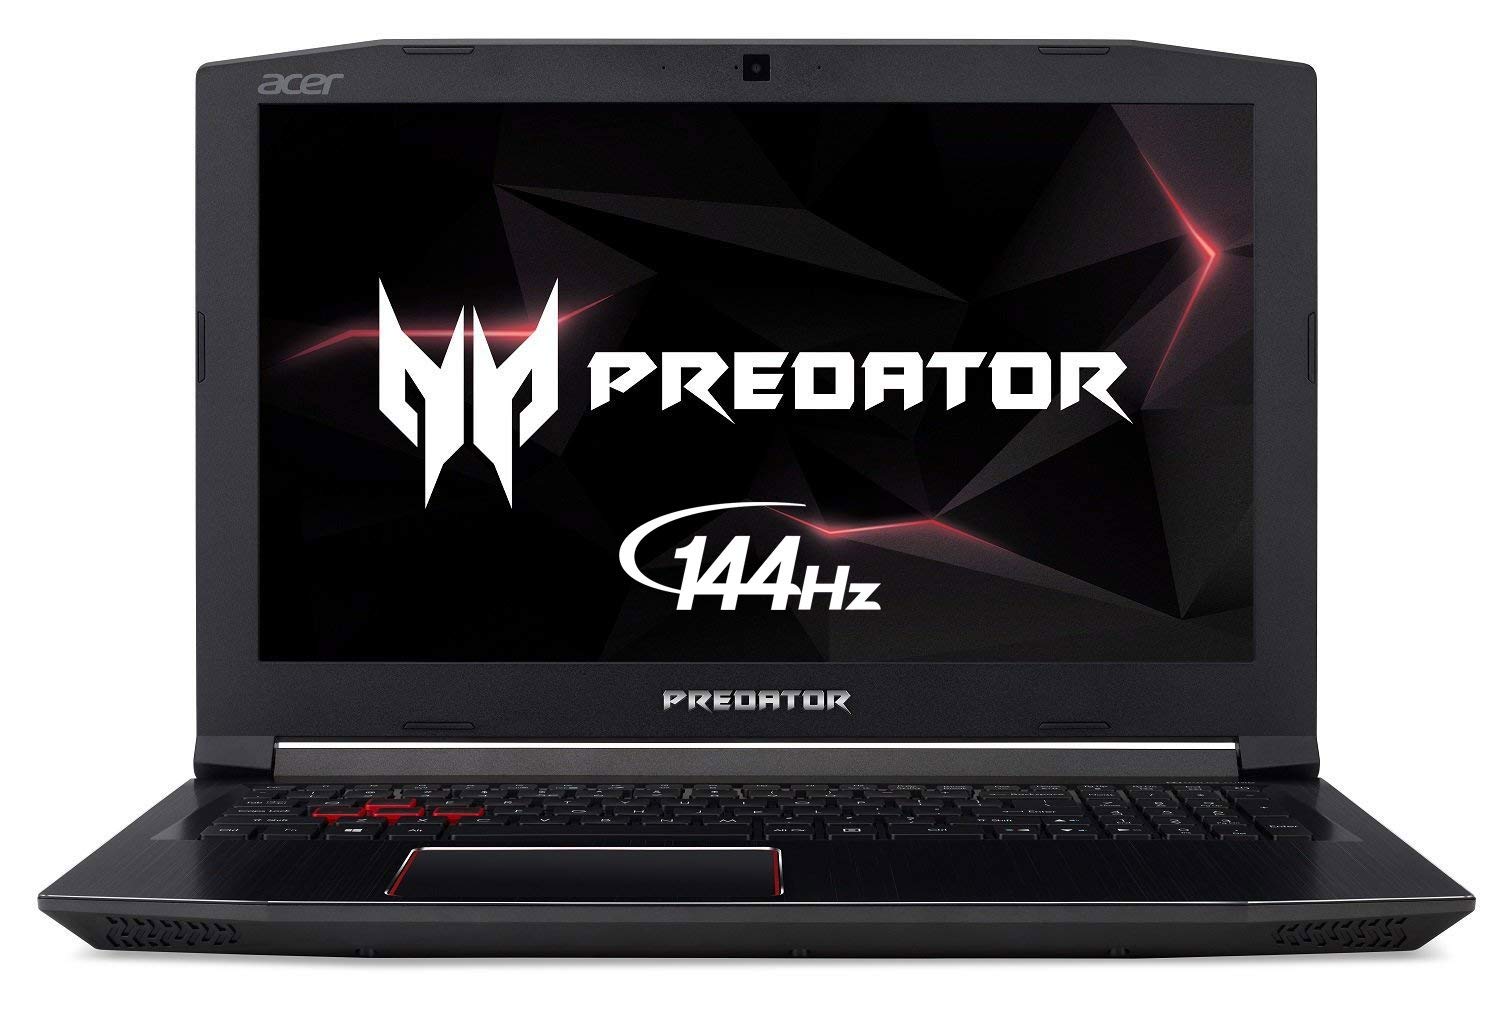 Acer Predator Helios 300 Gaming Laptop PC, 15.6